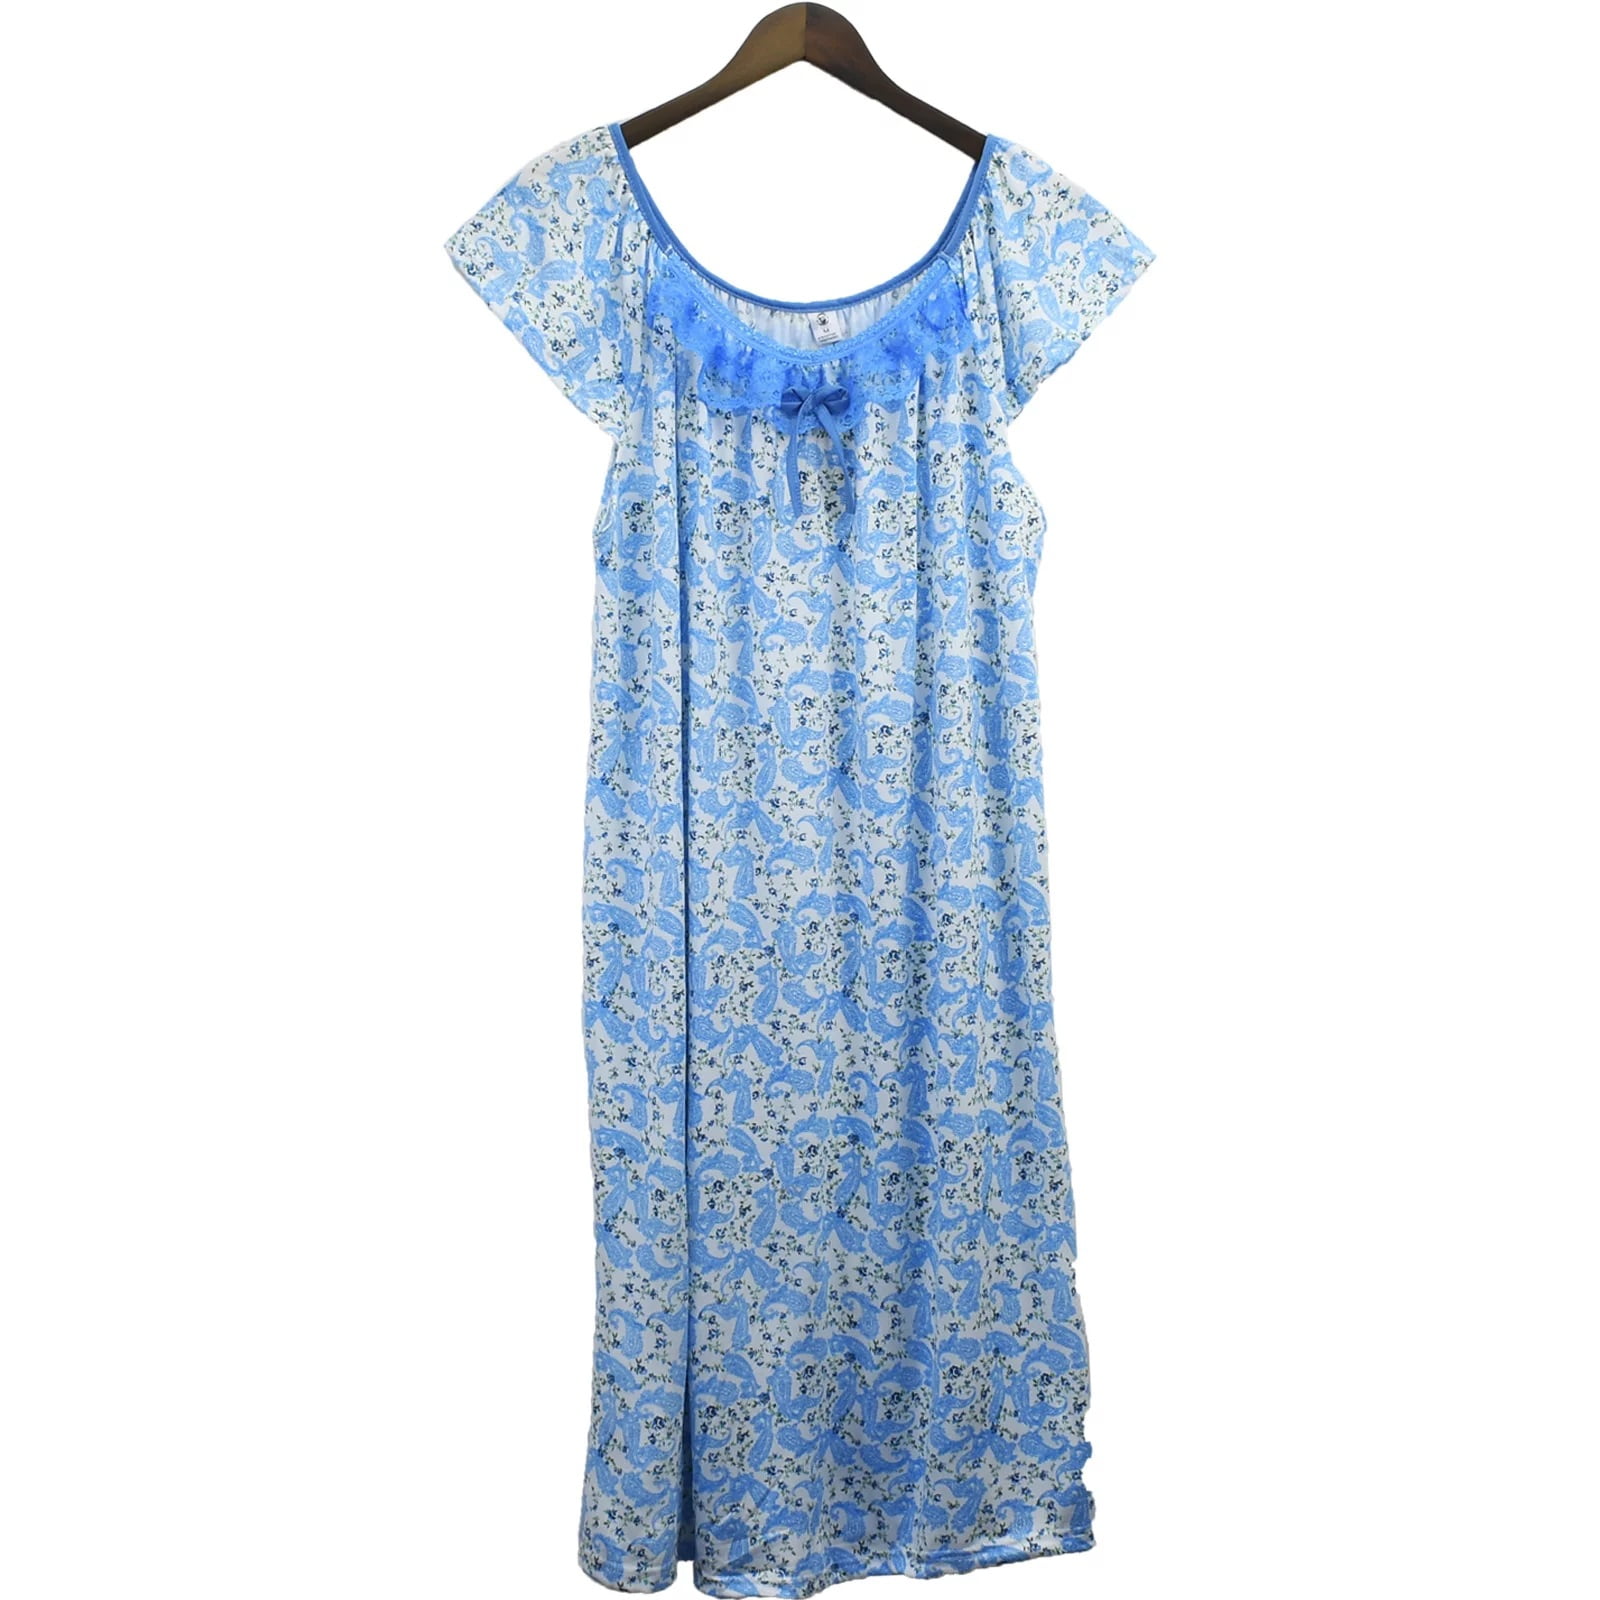 S.CHRISTINA Womens Pajamas Cotton Nightgown Plus Size Sleepwear for ...